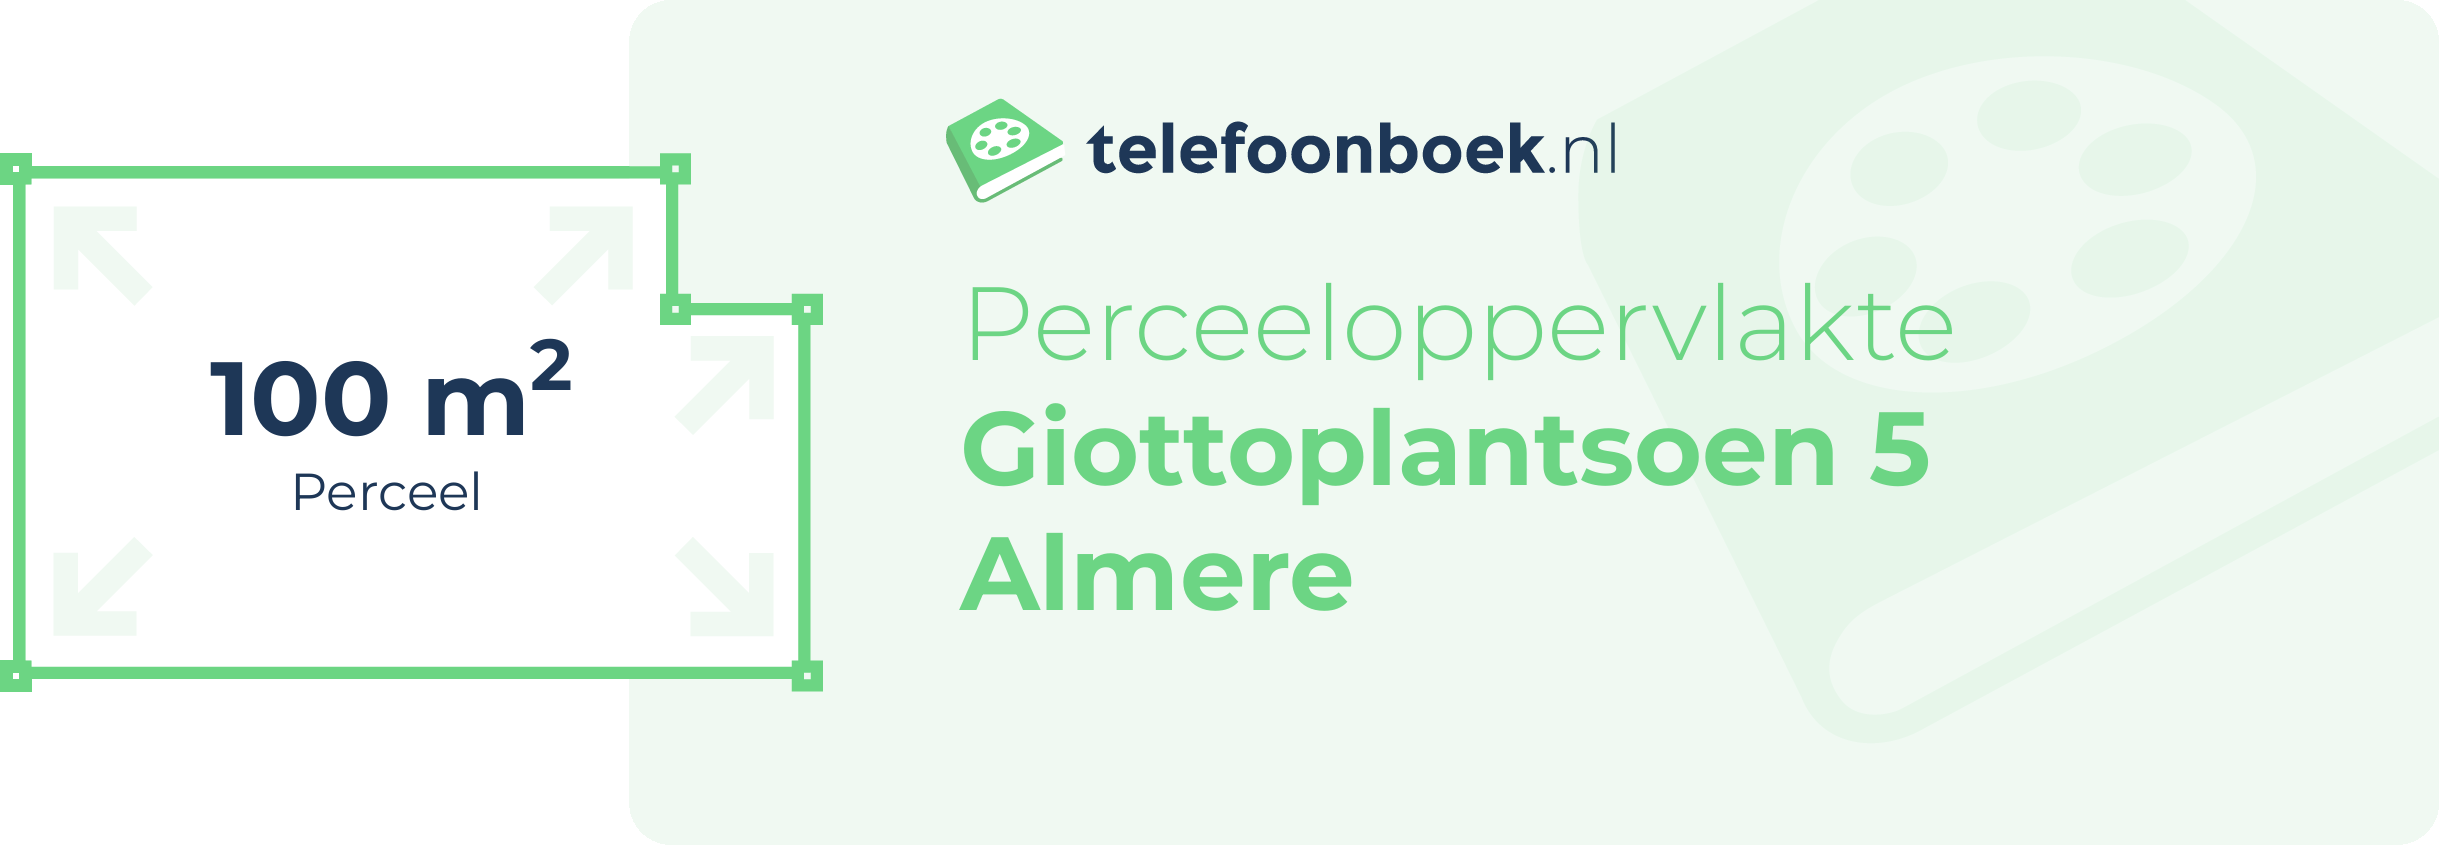 Perceeloppervlakte Giottoplantsoen 5 Almere